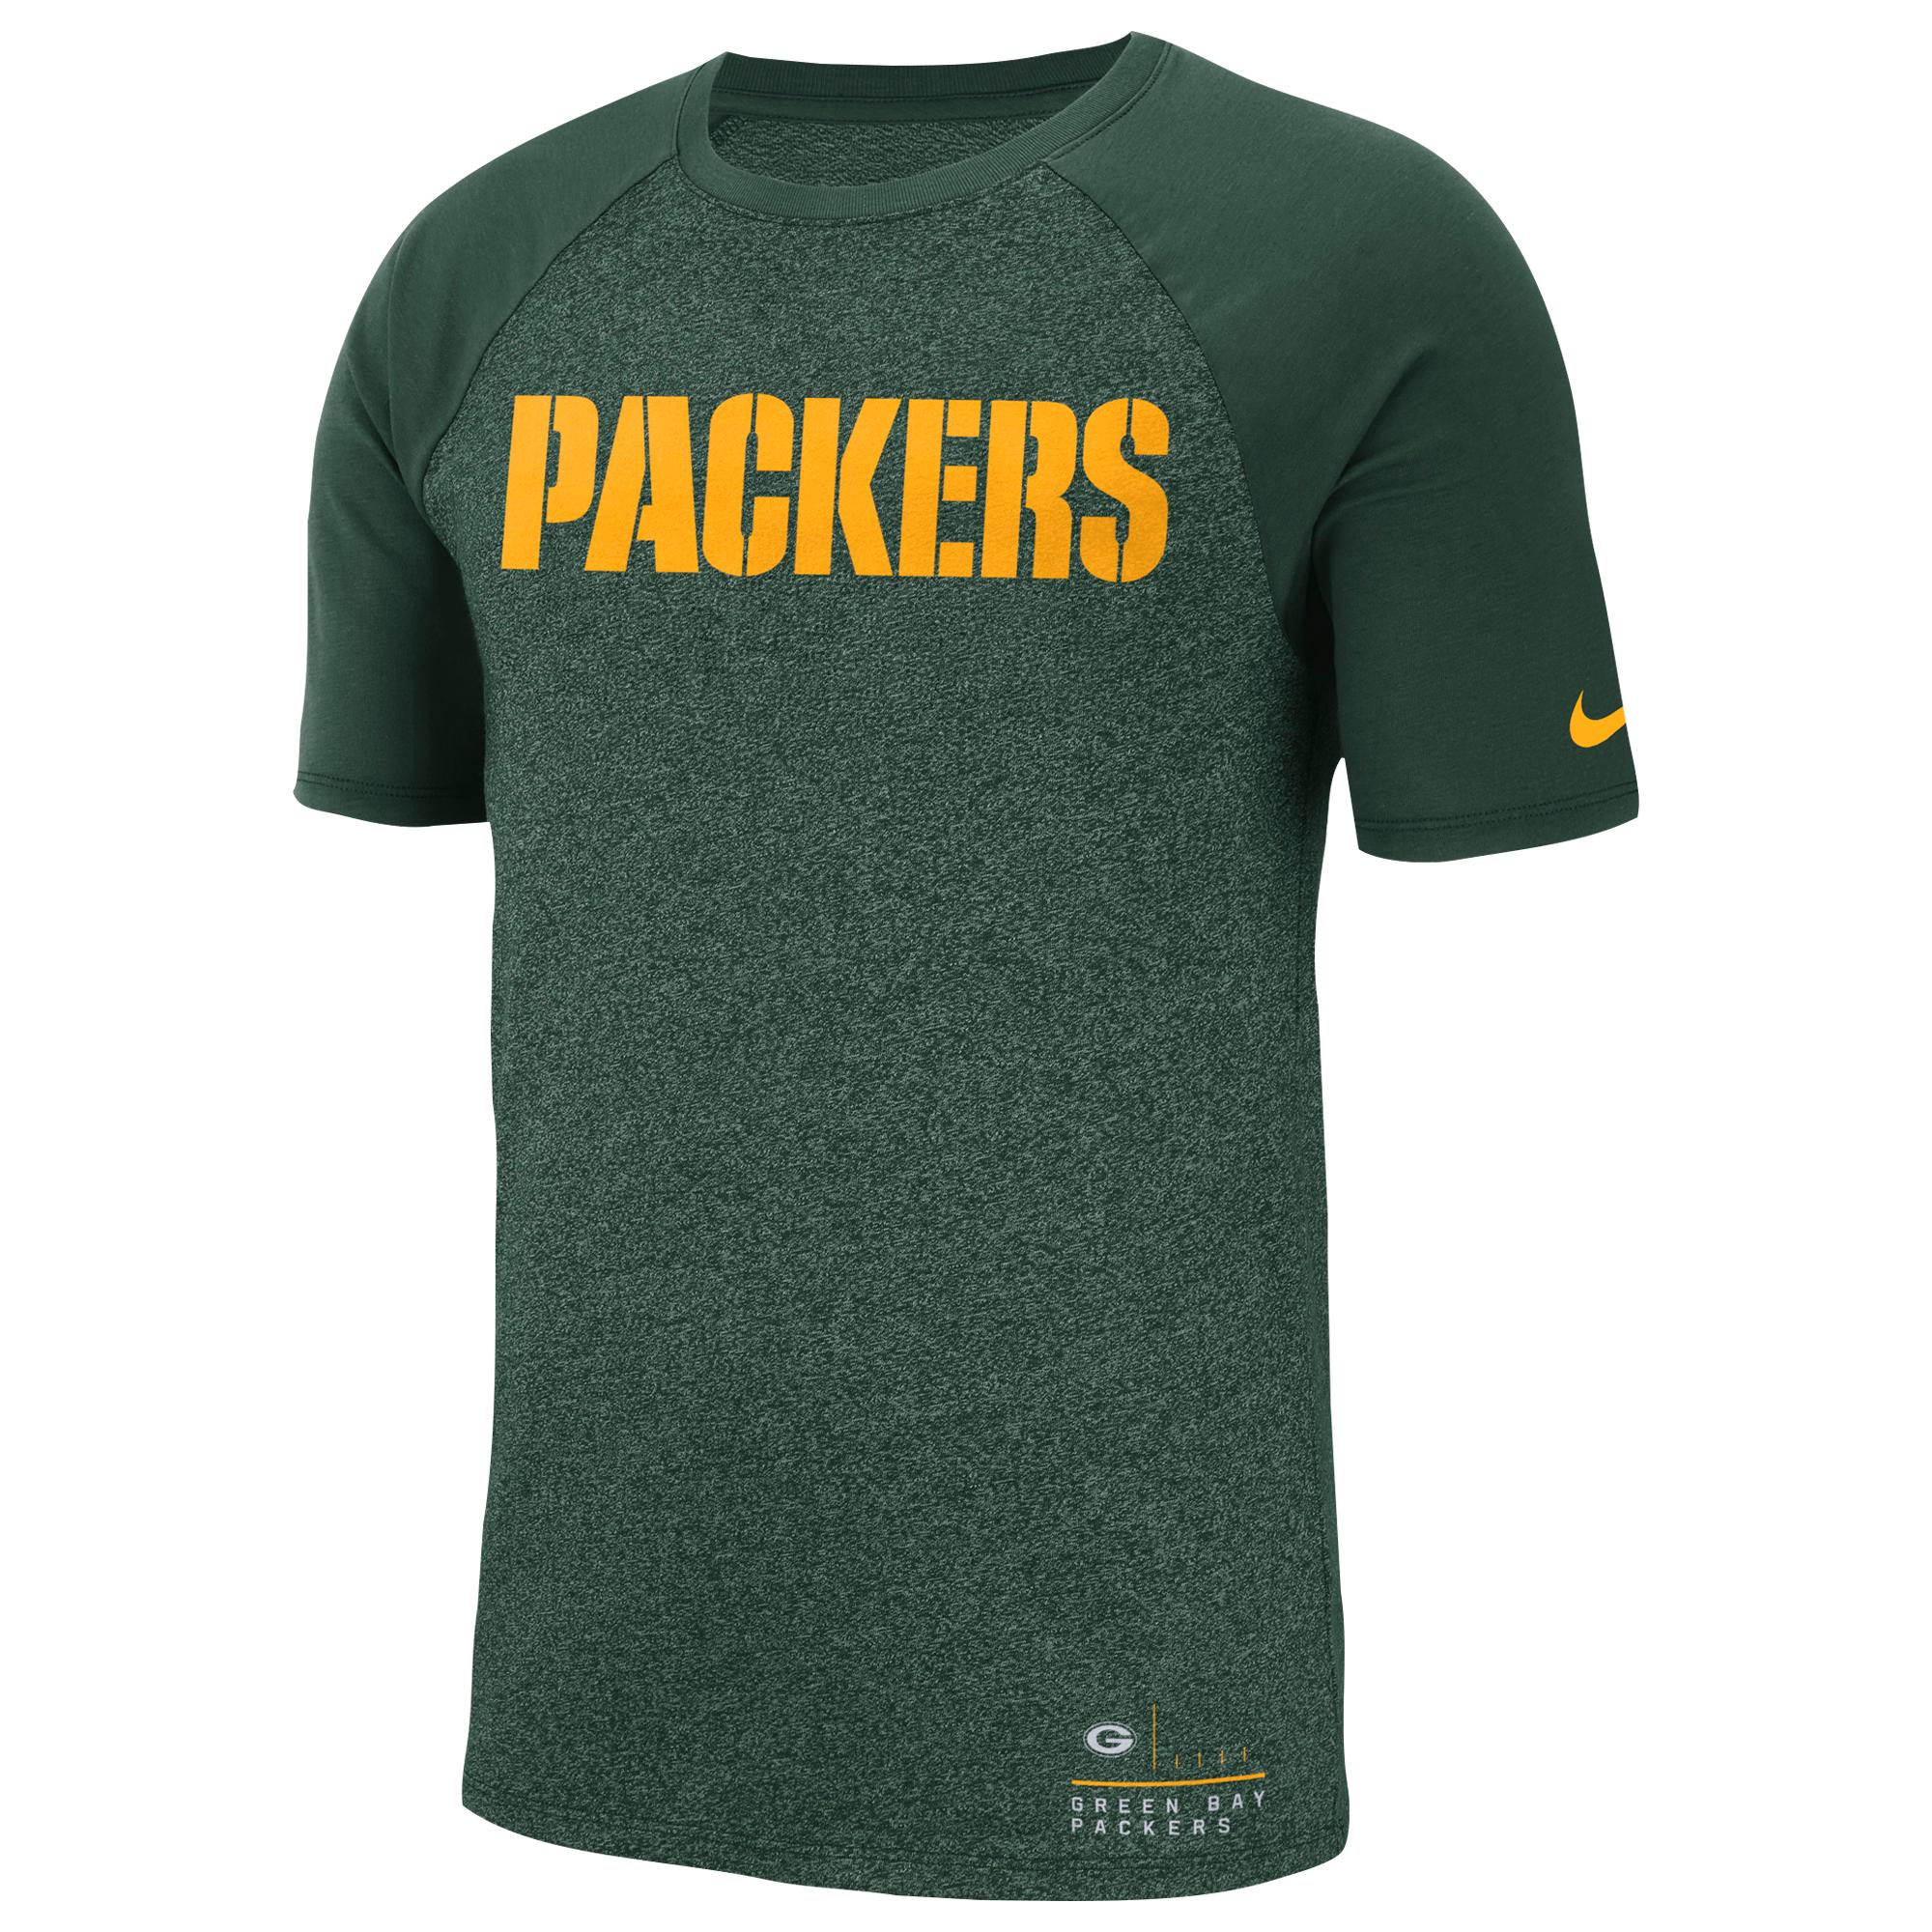 Nike Cotton Raglan (nfl Packers) Men's T-shirt in Green for Men - Lyst